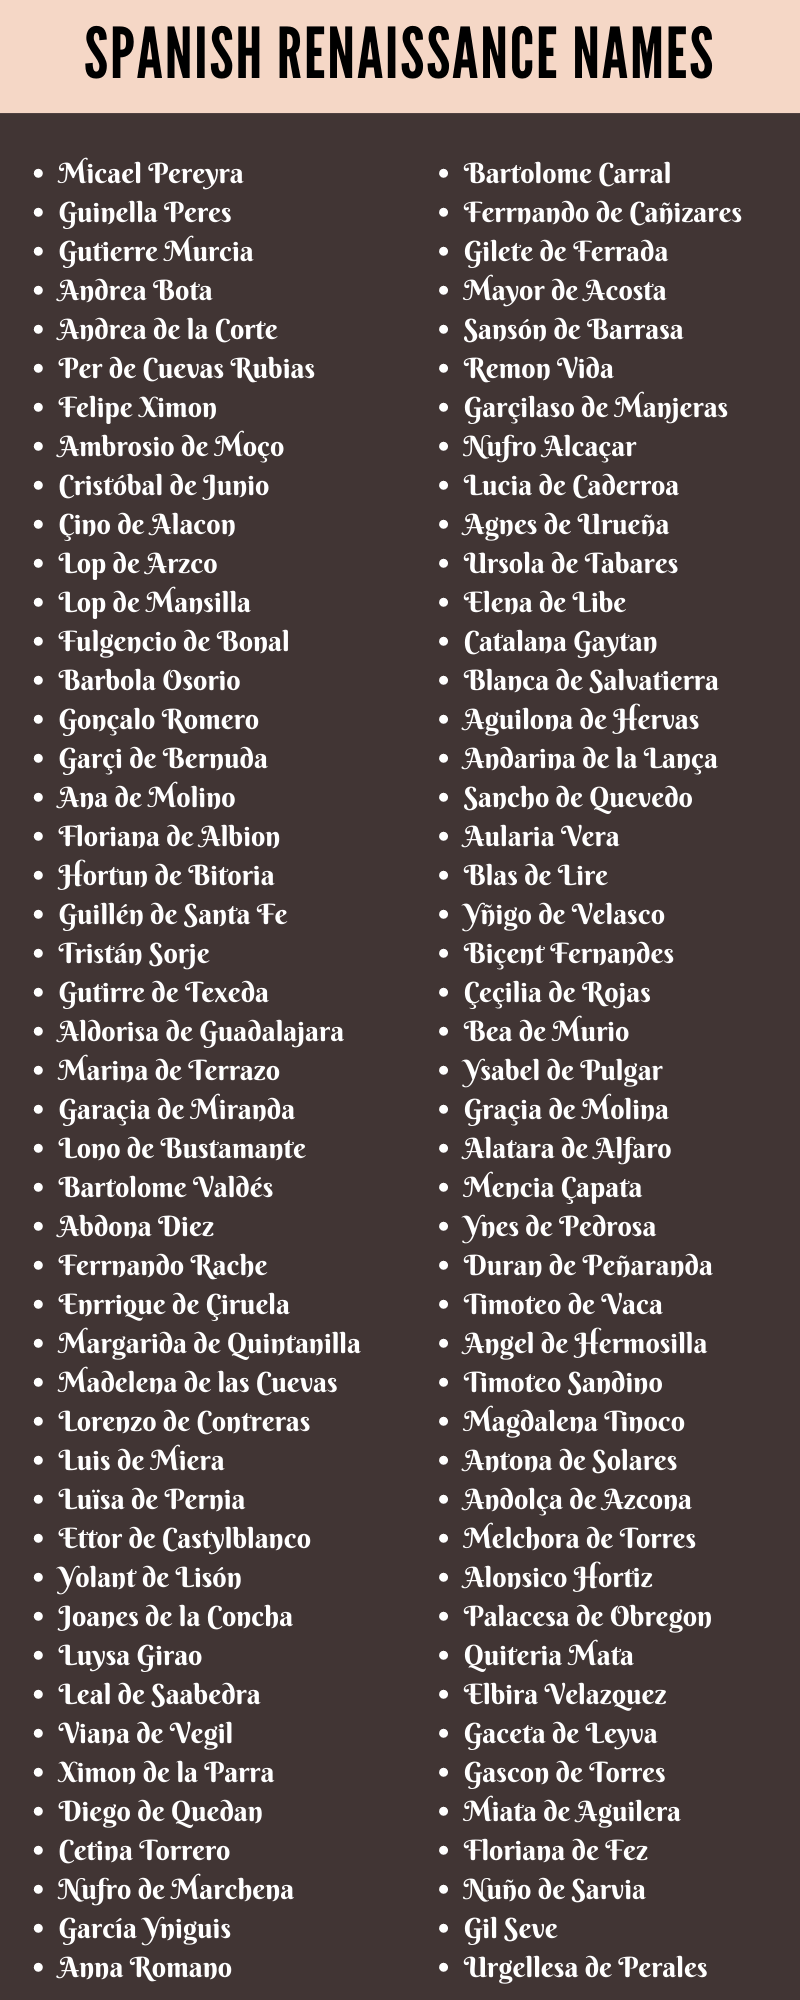 Spanish Renaissance Names